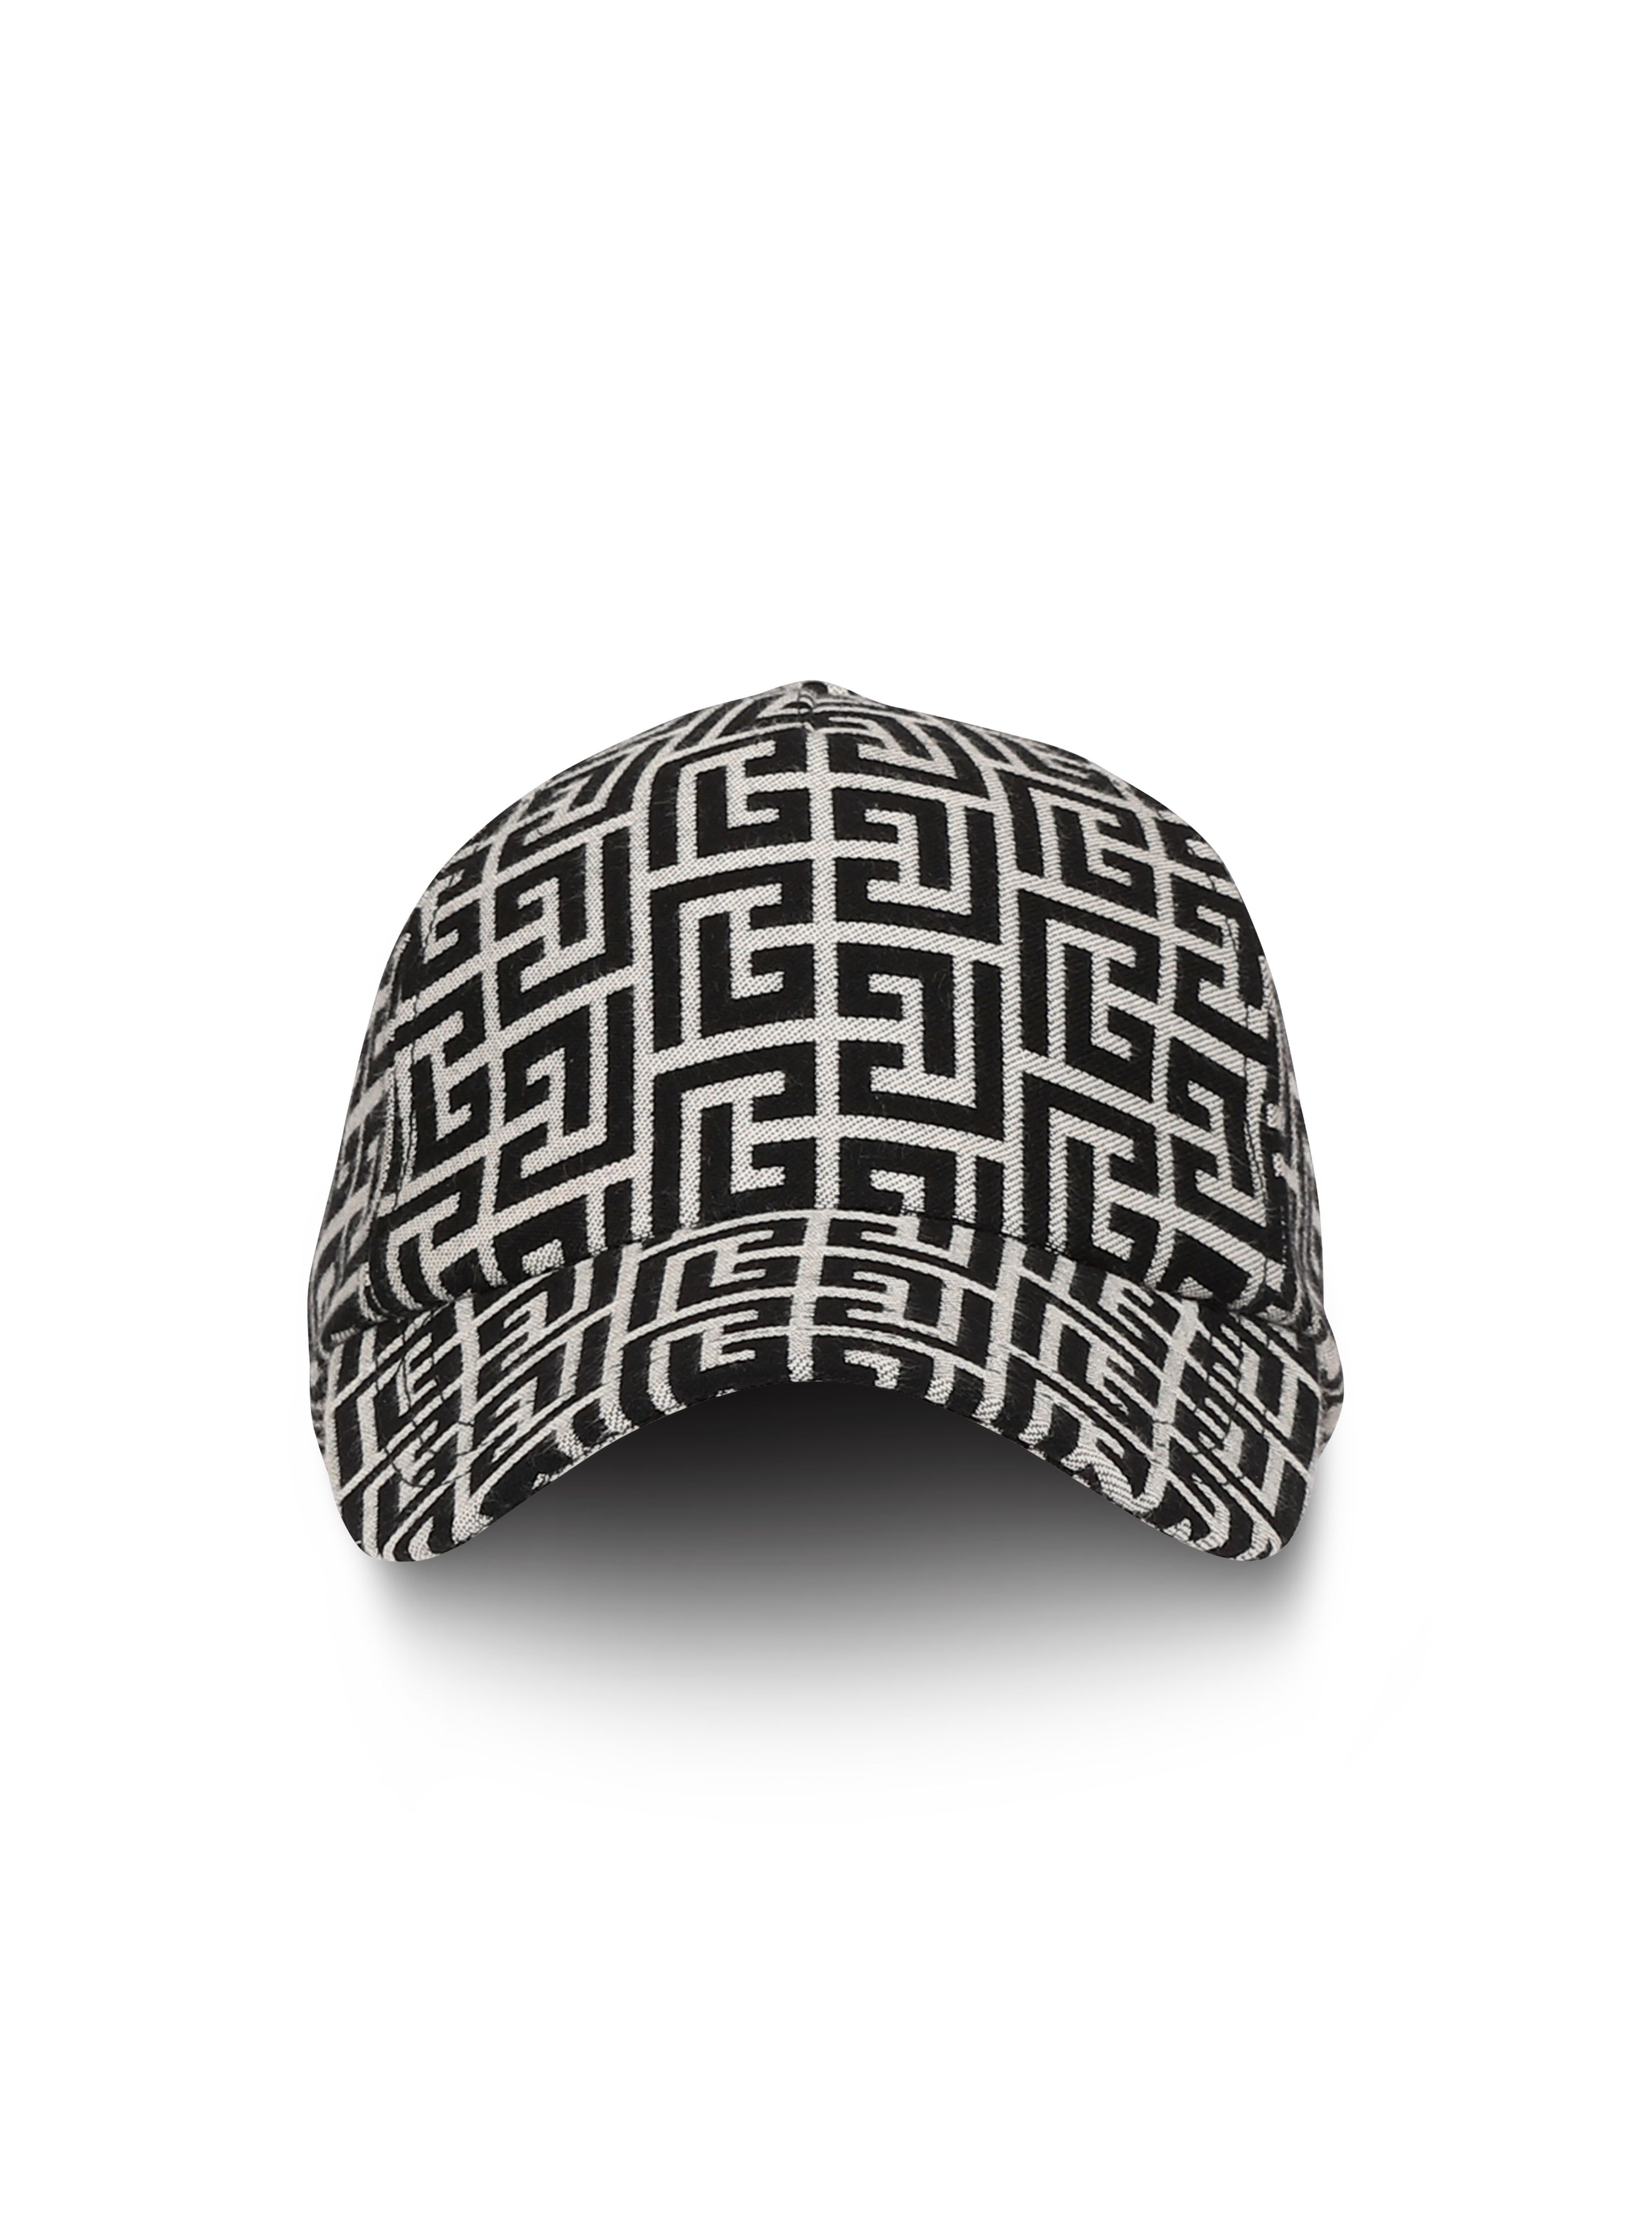 Cotton cap with Balmain monogram, black